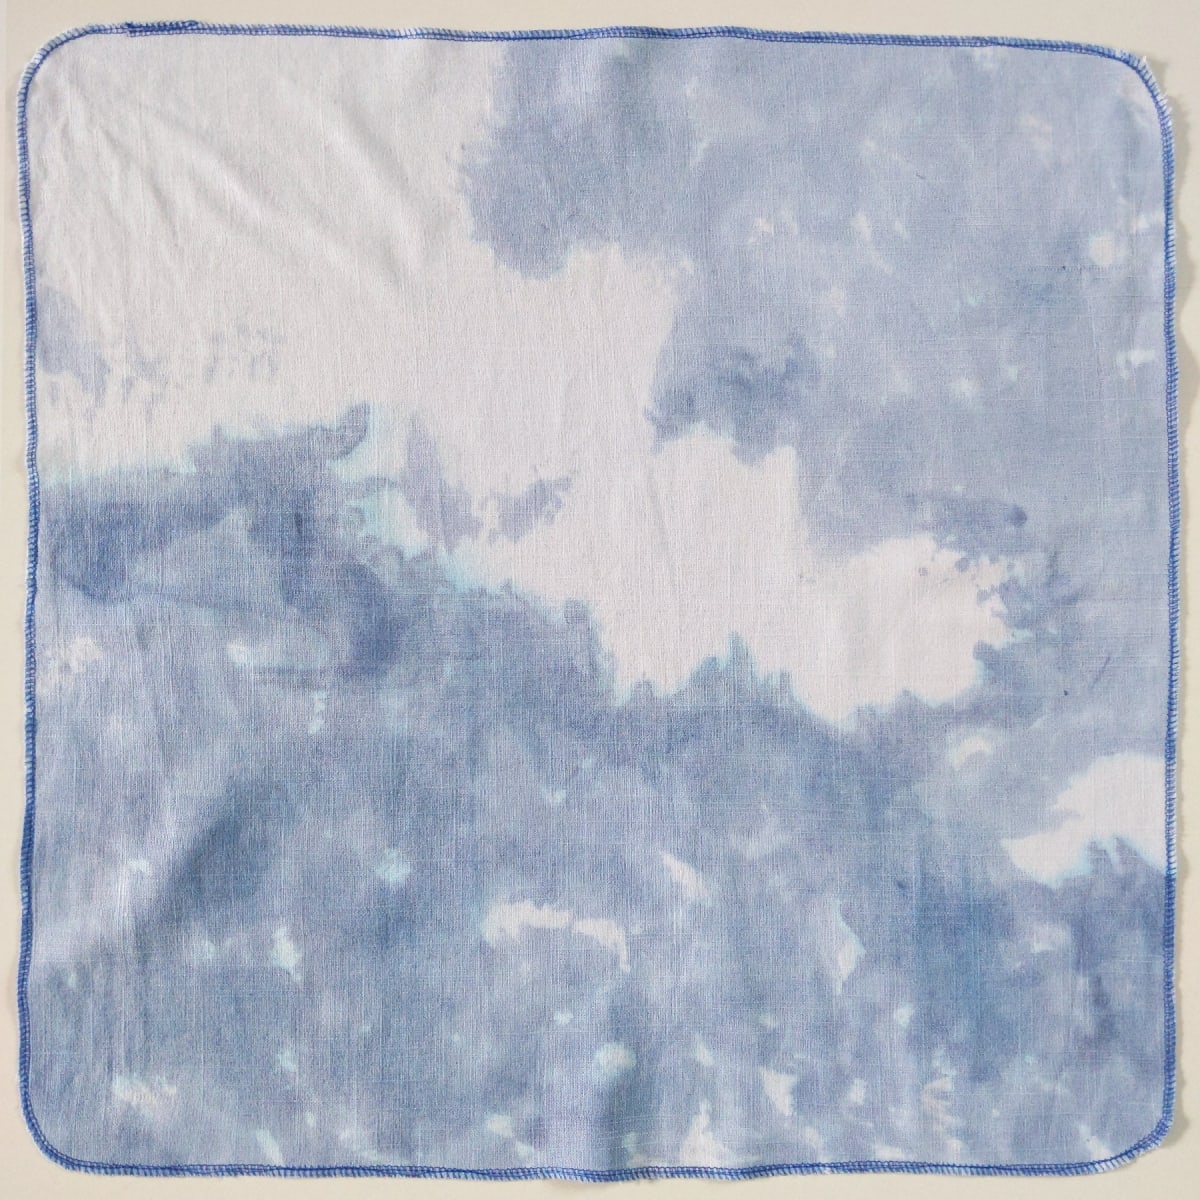 Cloud dyed napkins #2 by Savannah Jubic